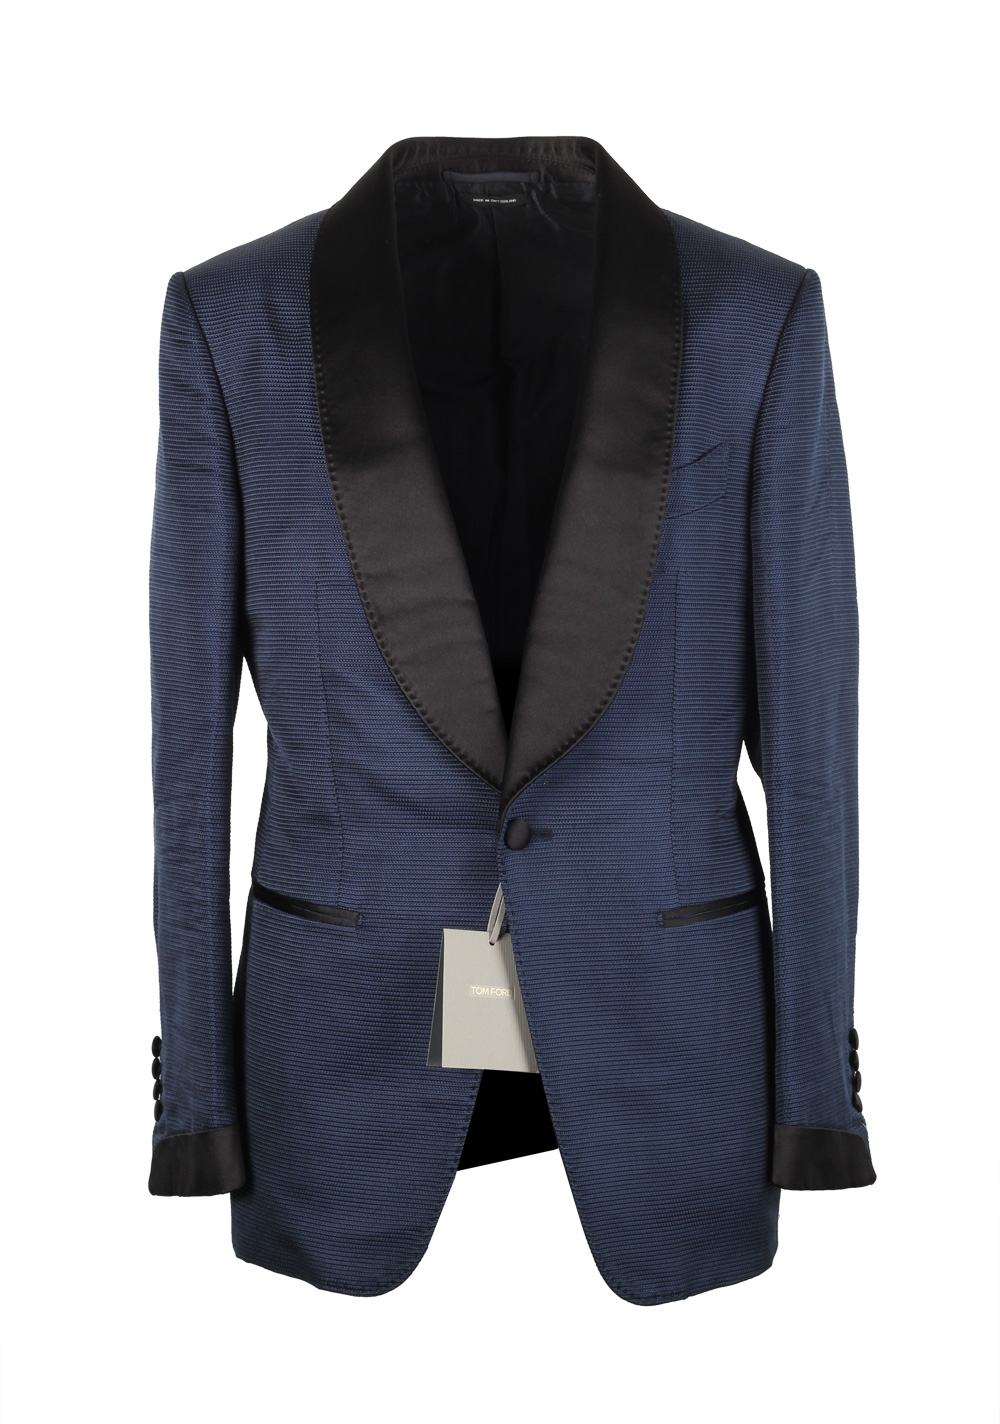 TOM FORD Shelton Blue Tuxedo Dinner Jacket Size 46 / 36R U.S. | Costume ...